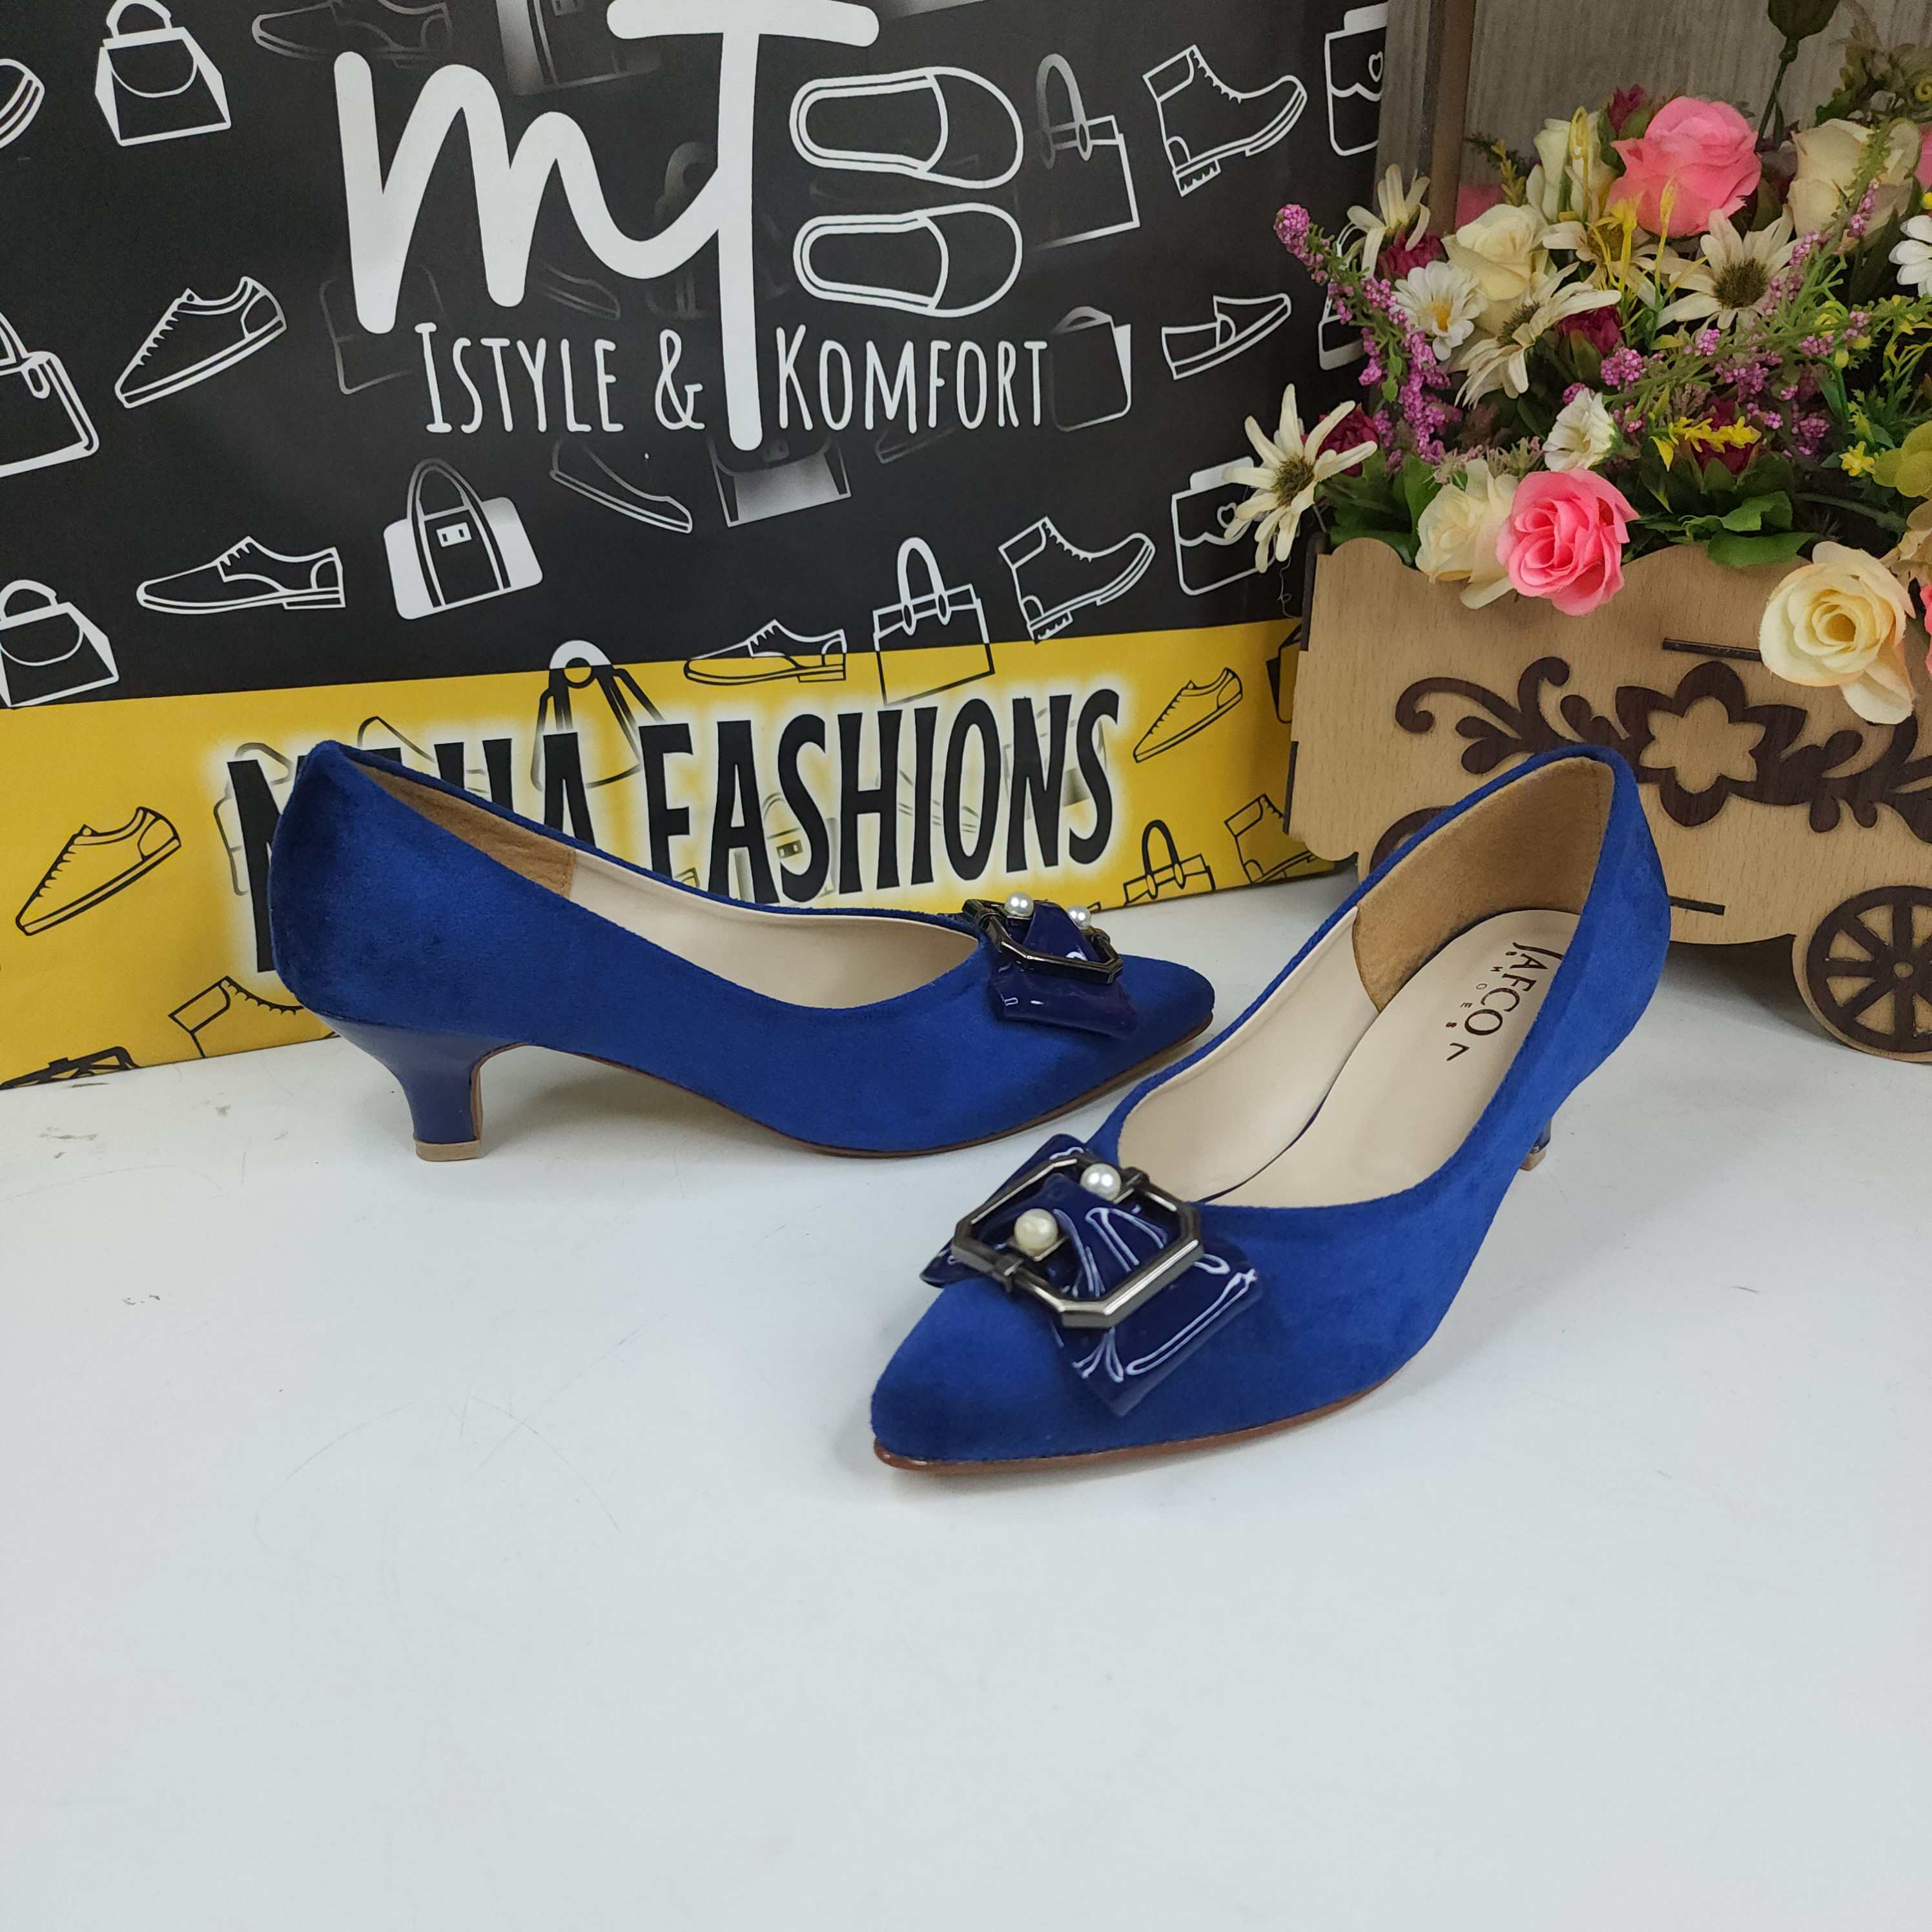 Blue Buckle Shoe in Heel - Maha fashions -  